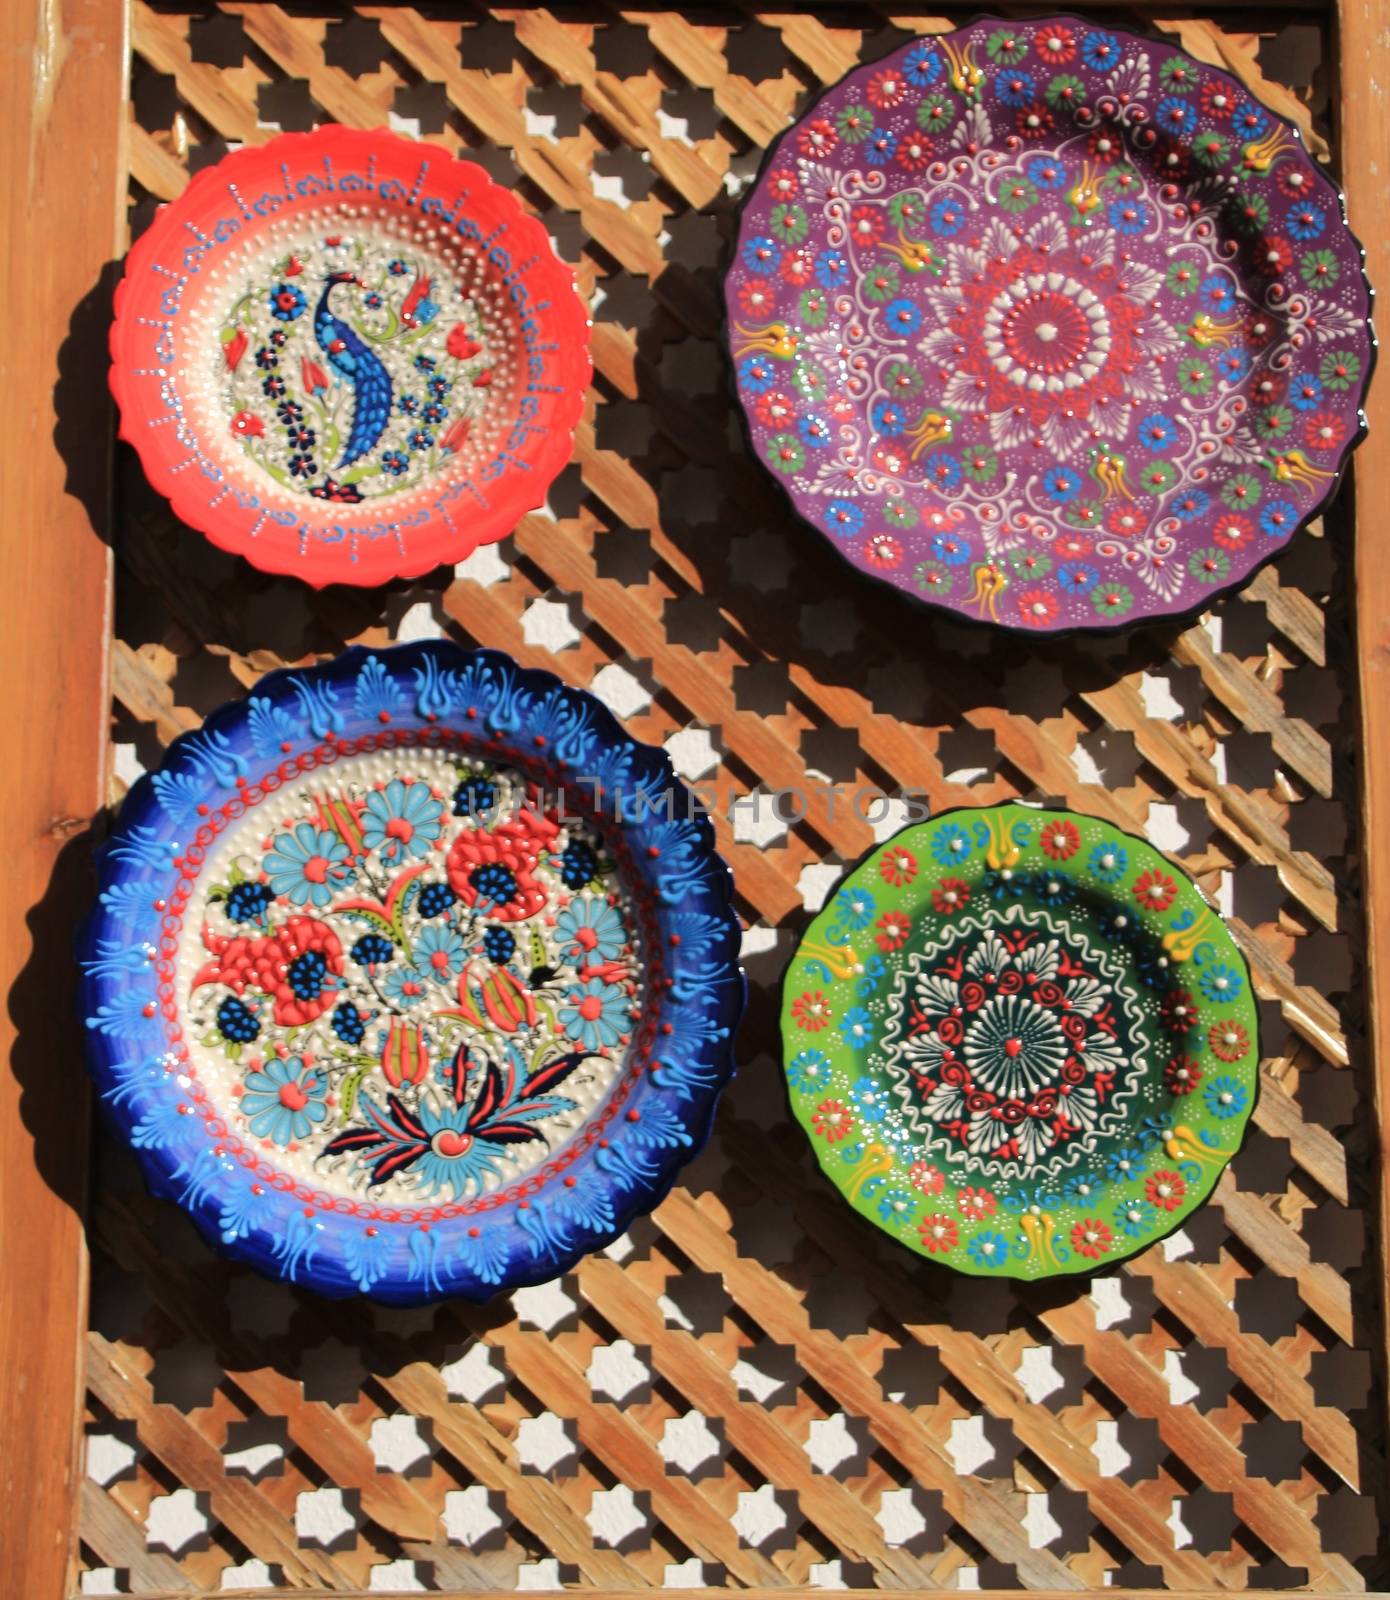 Ceramic souvenirs for sale by soniabonet